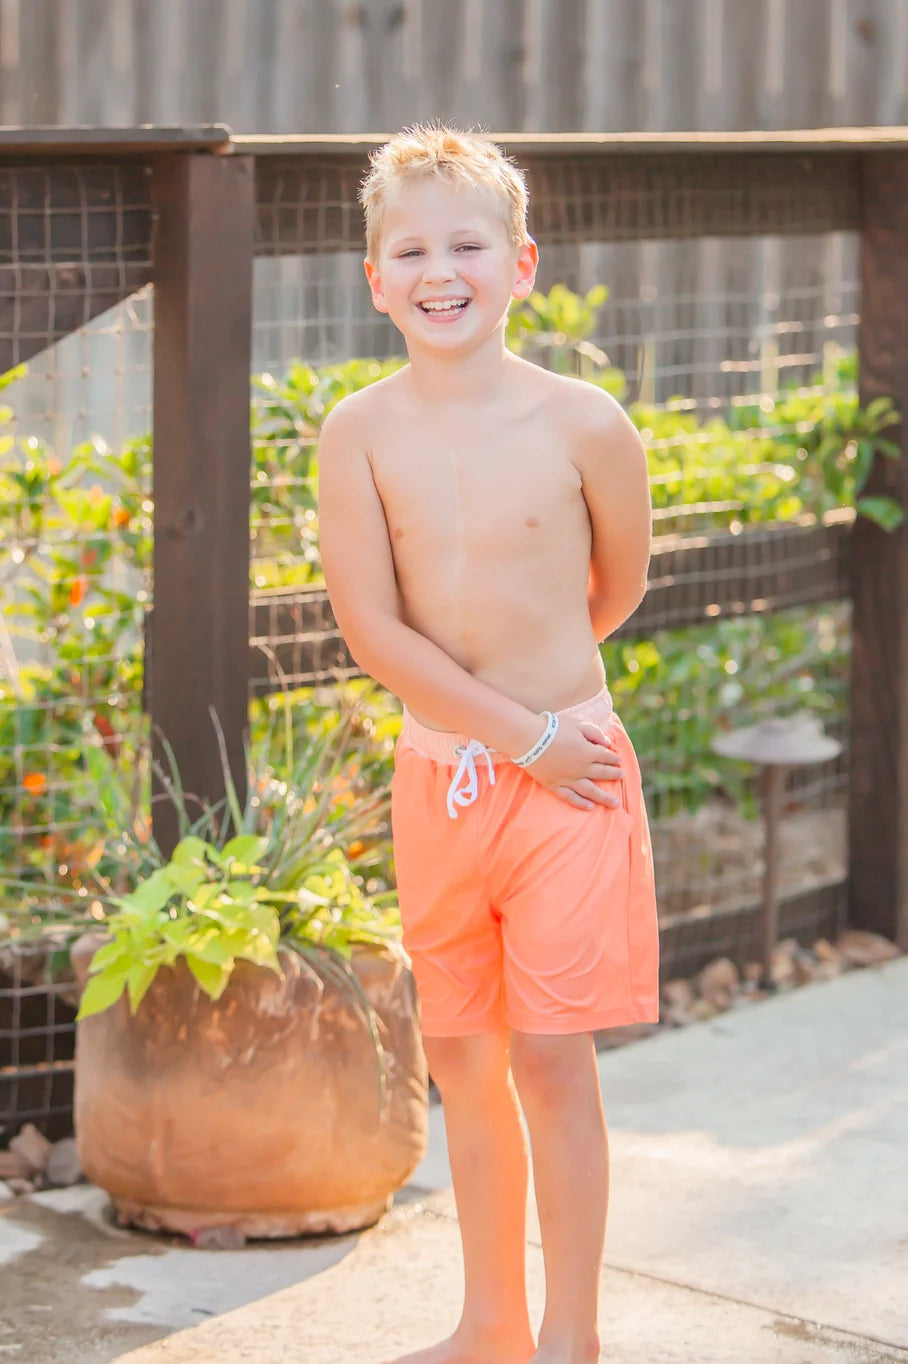 Boy Shorts in Orange Sherbet